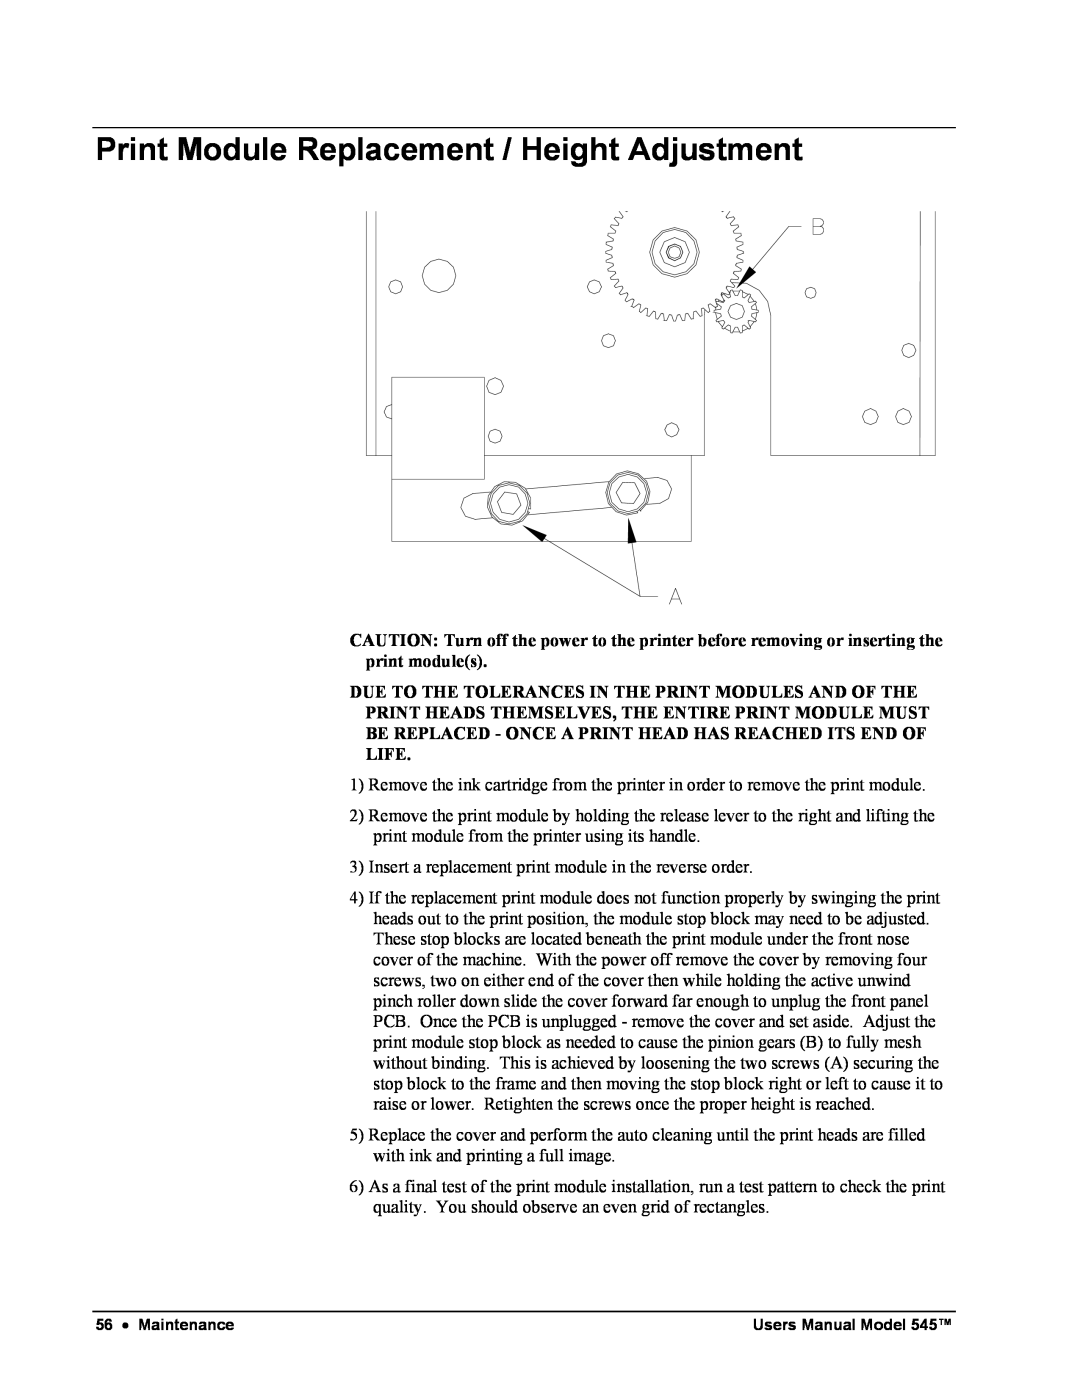 Paxar 545 user manual Print Module Replacement / Height Adjustment 